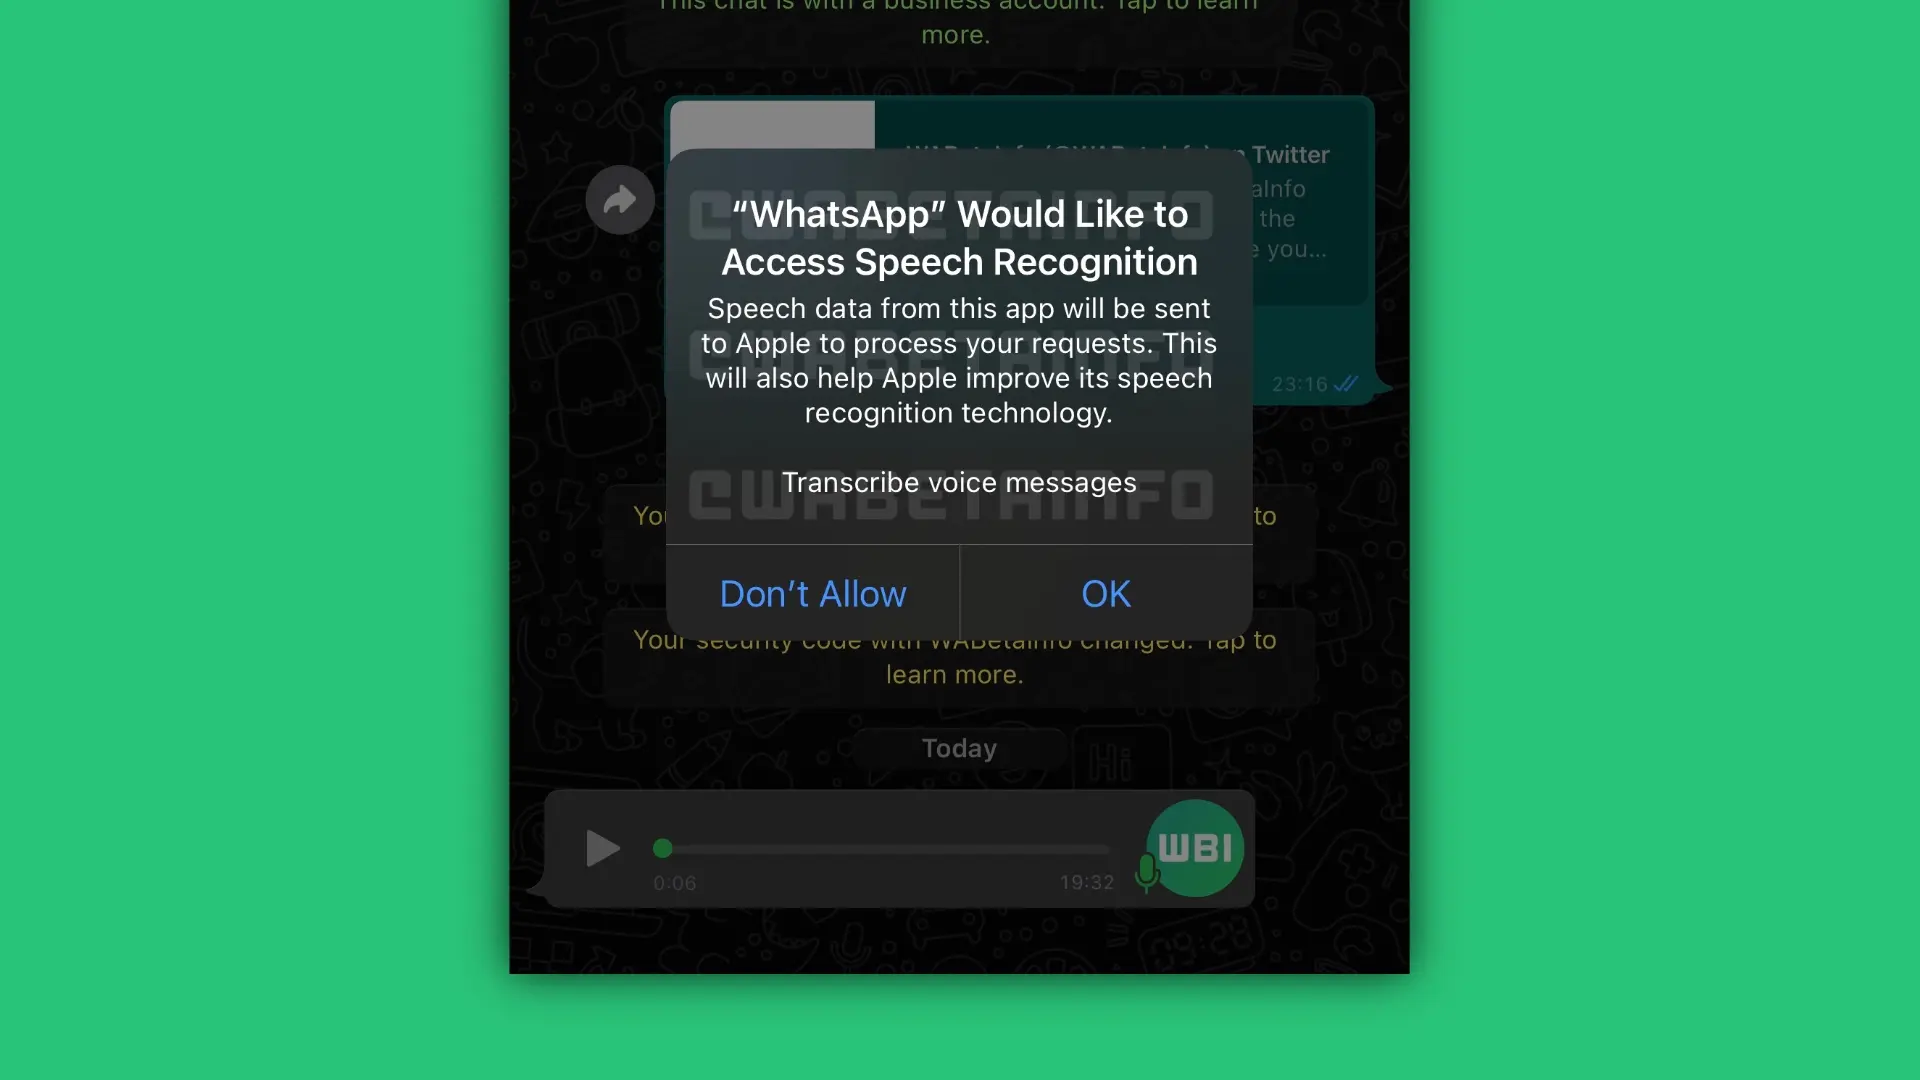 ontop.vn whatsapp voice message transcription feature 2